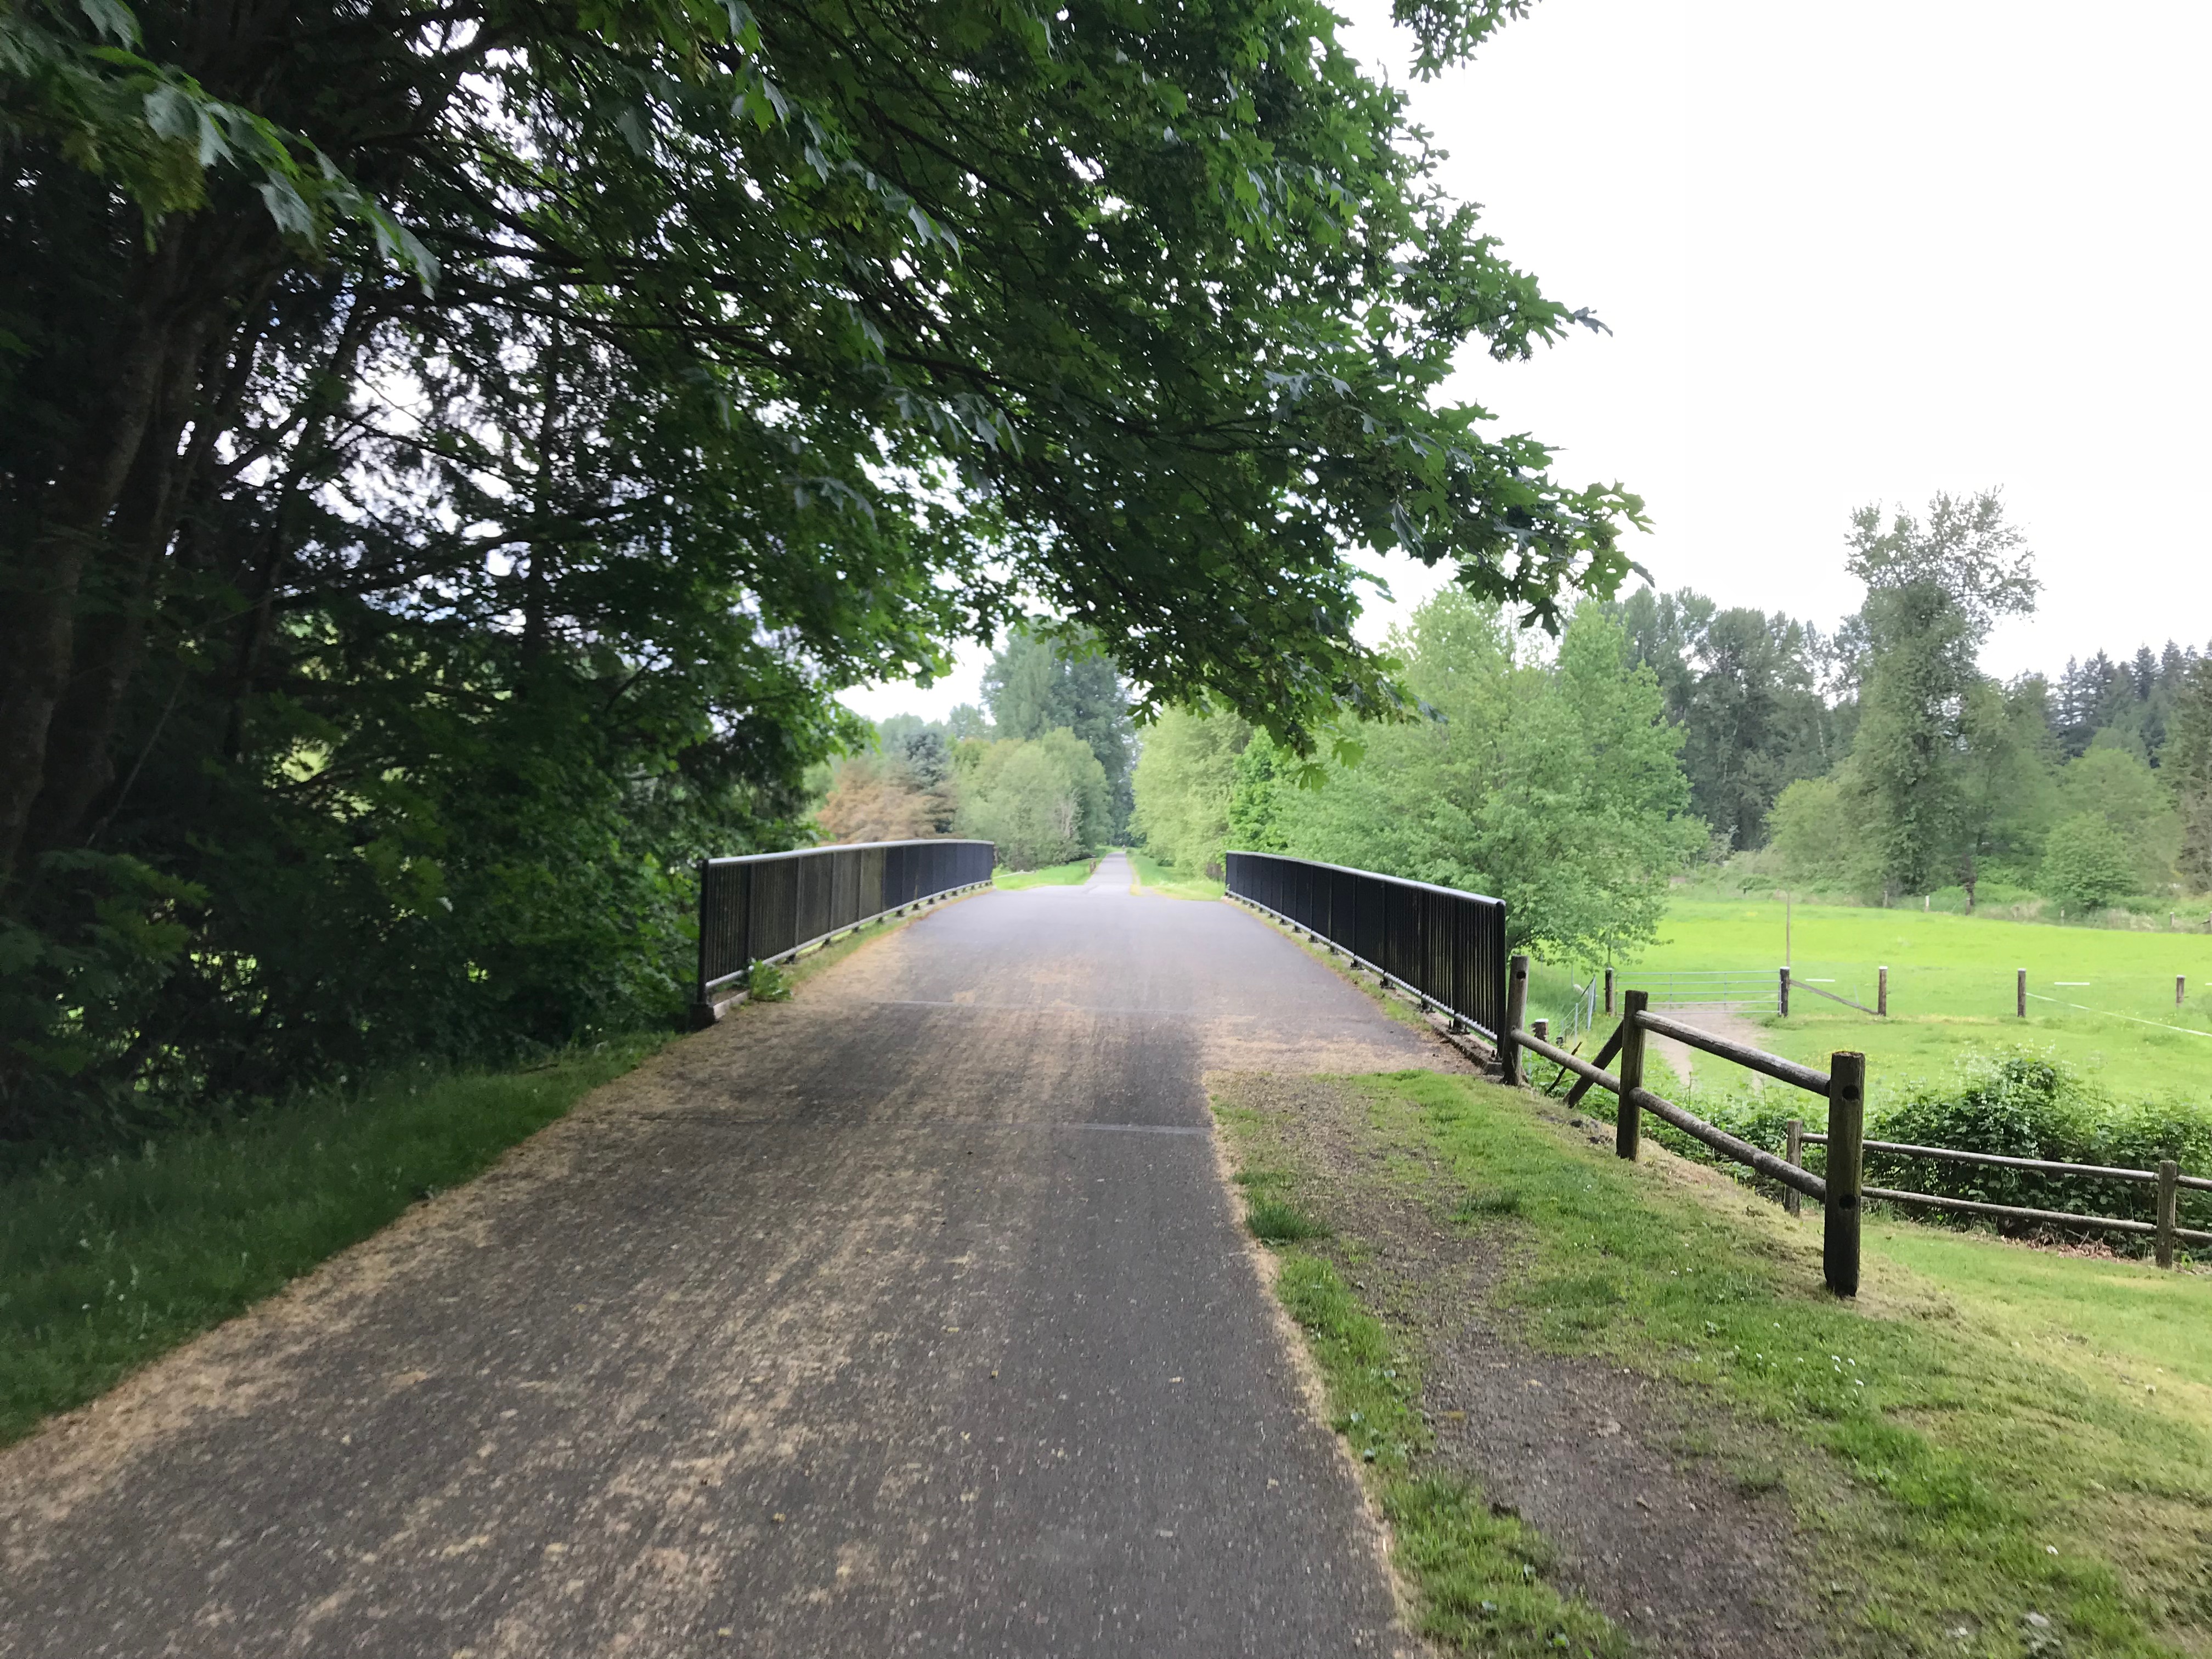 A bike trail bridge in a verdant exurban area